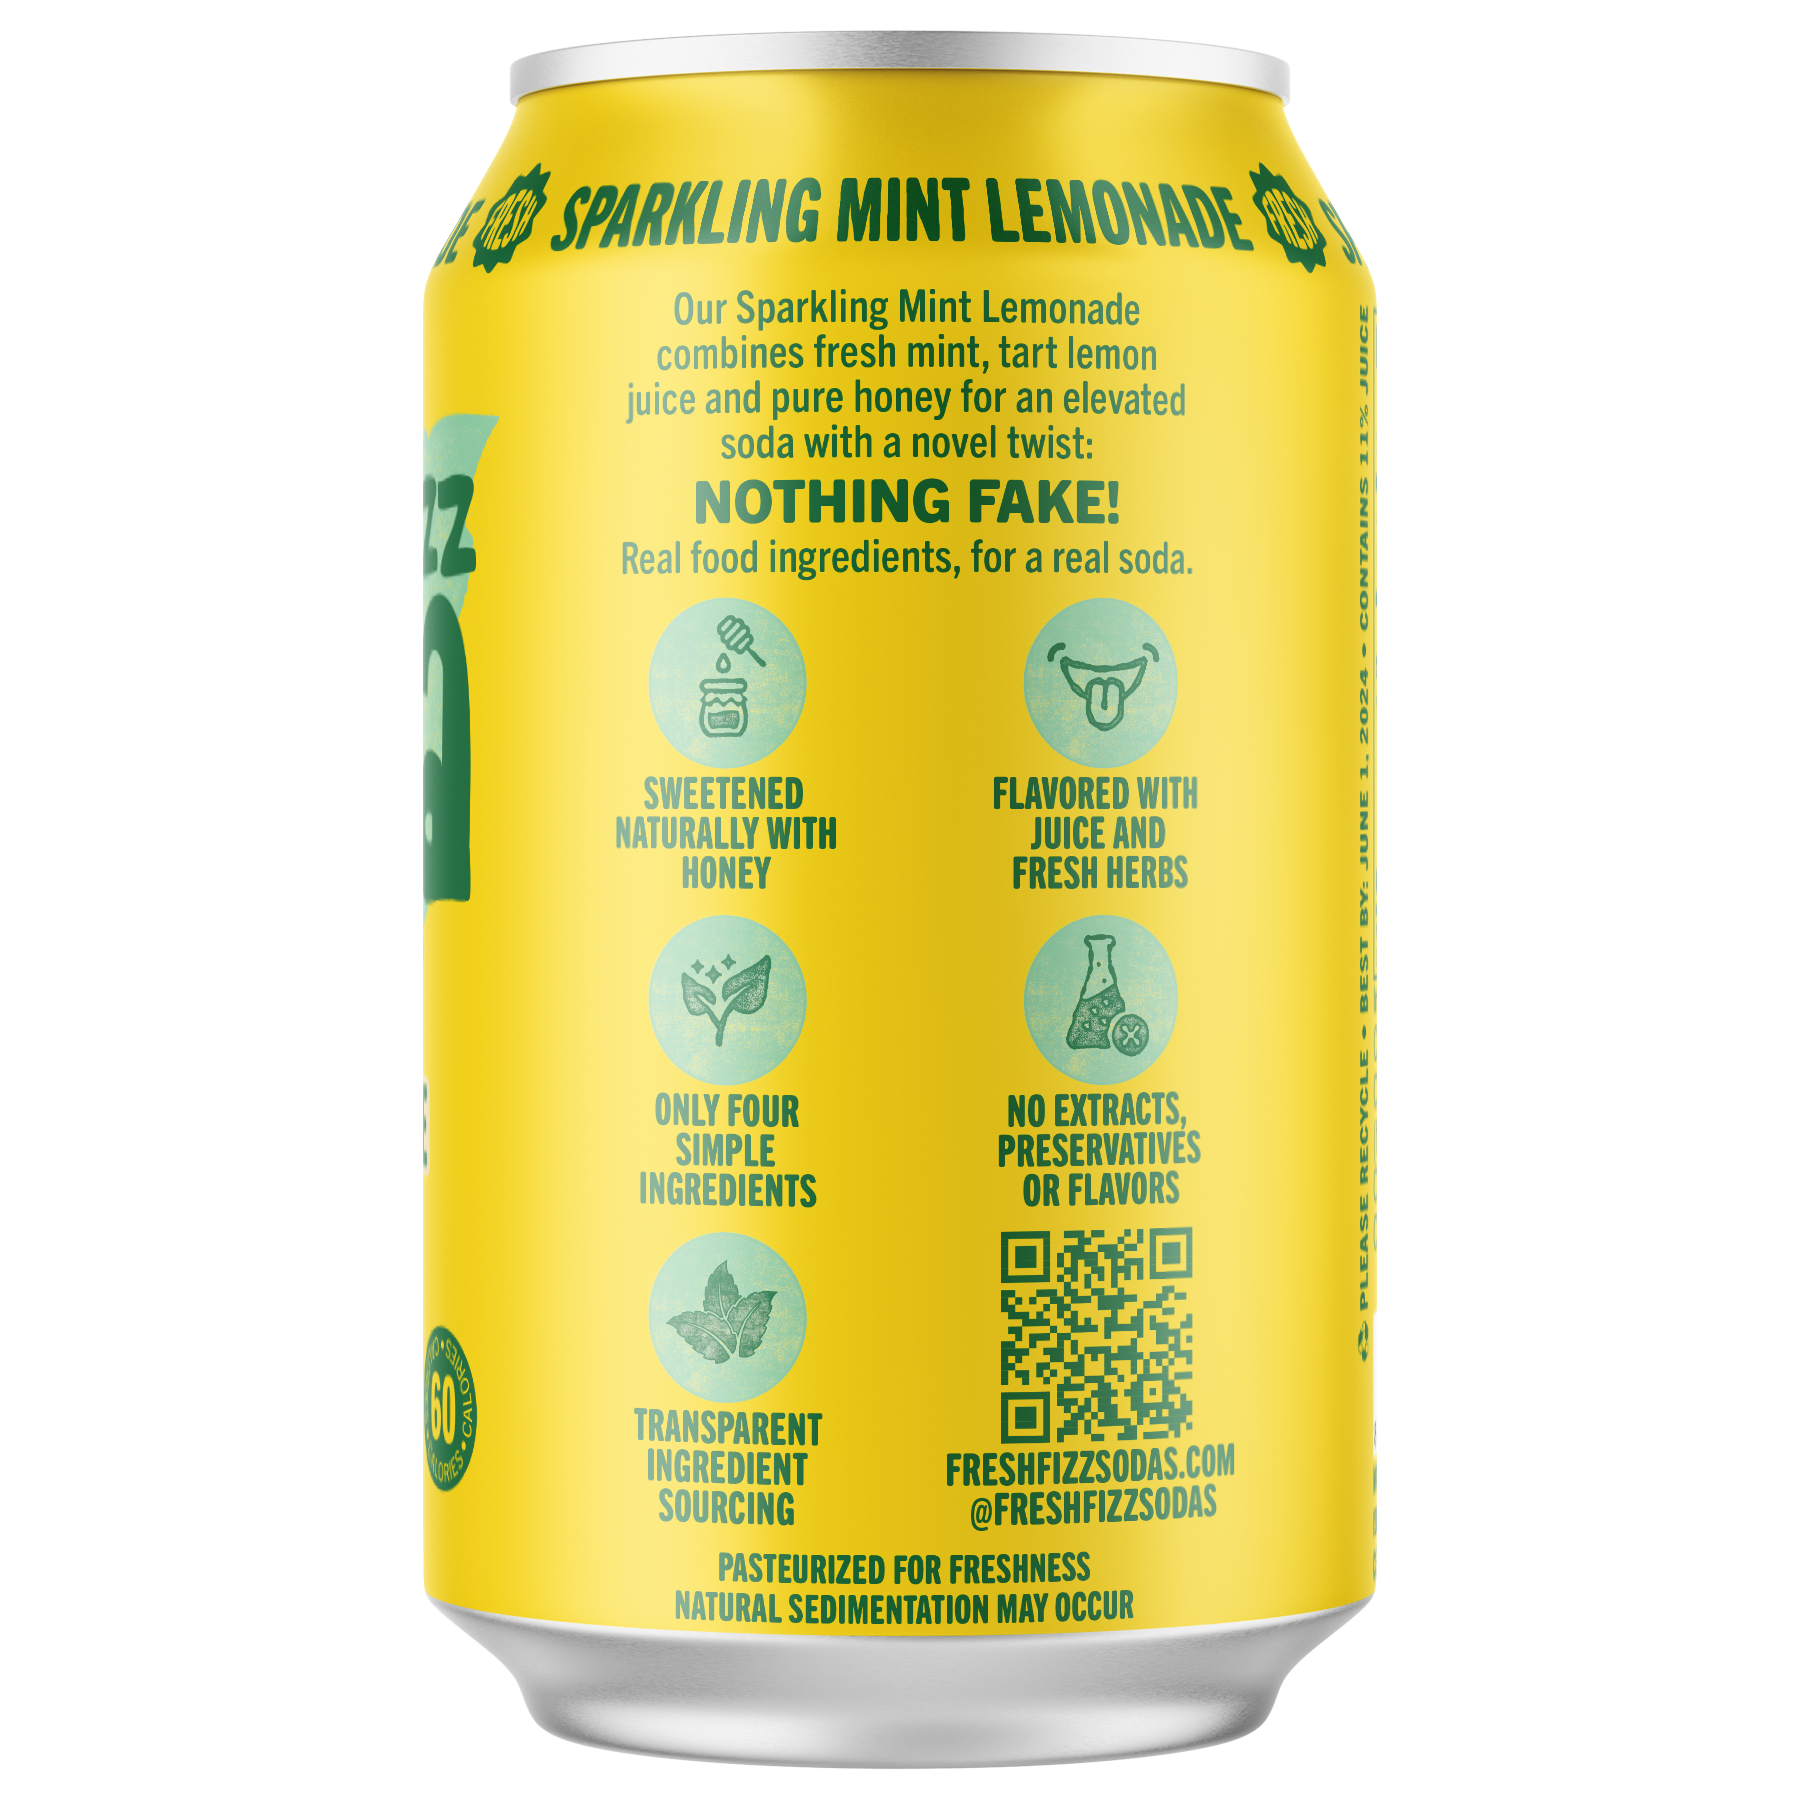 Dented or Ugly Lemonade Fresh Sparkling Mint – - (12-Pack) Sodas cans Fizz